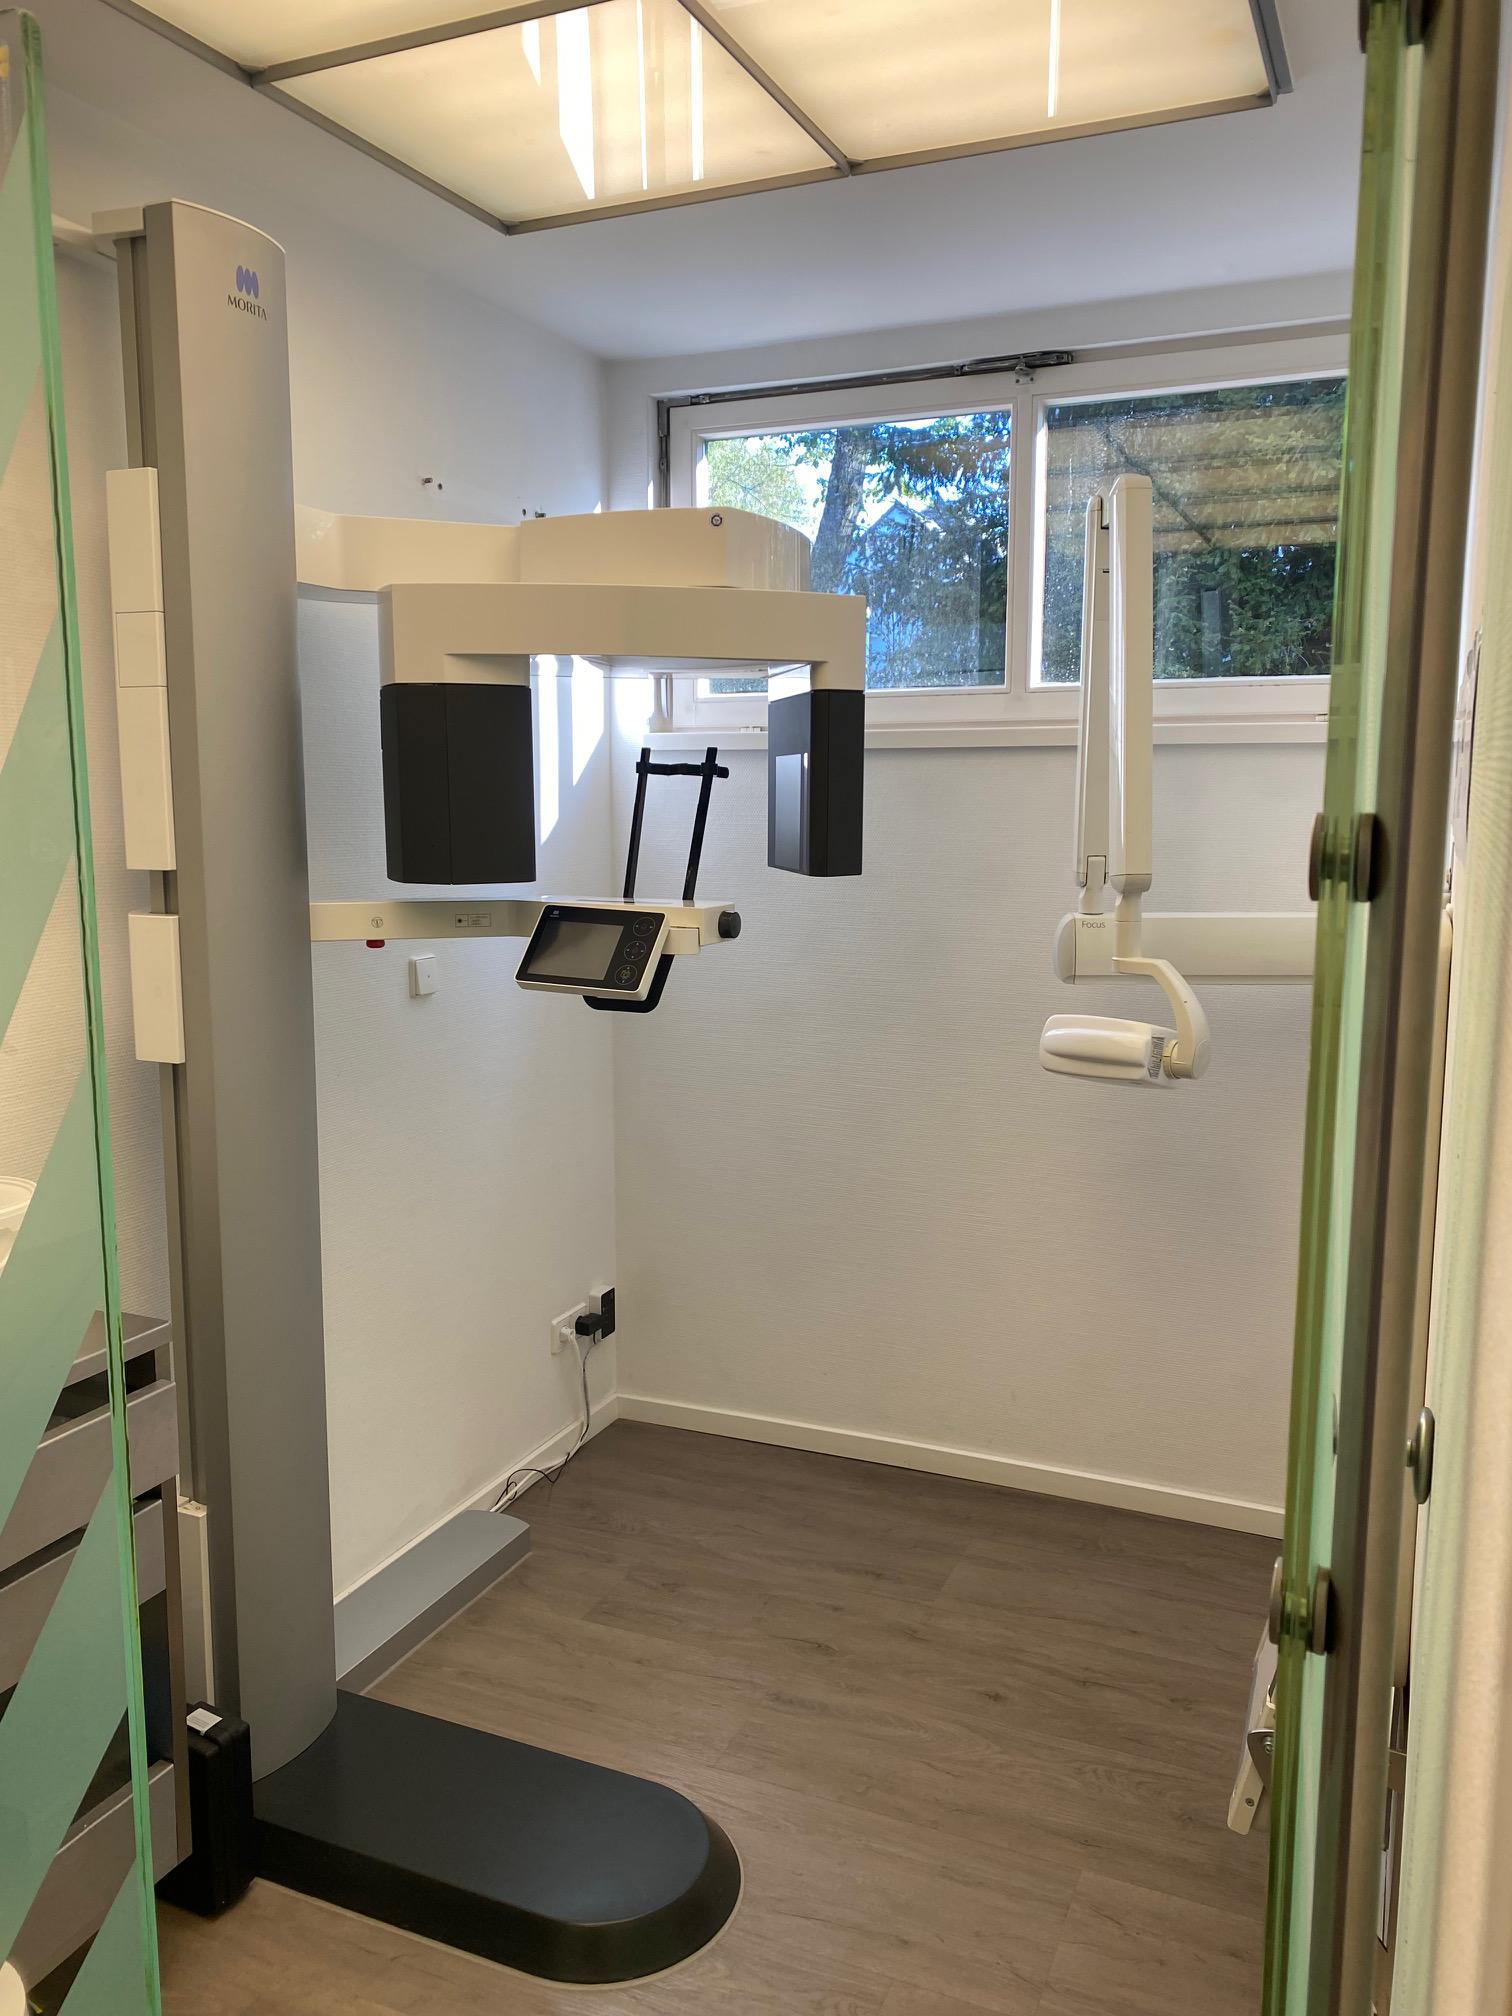 Röntgenzimmer | Zahnärztliche Gemeinschaftspraxis Dres. Hänssler, Winterer & Kollegen